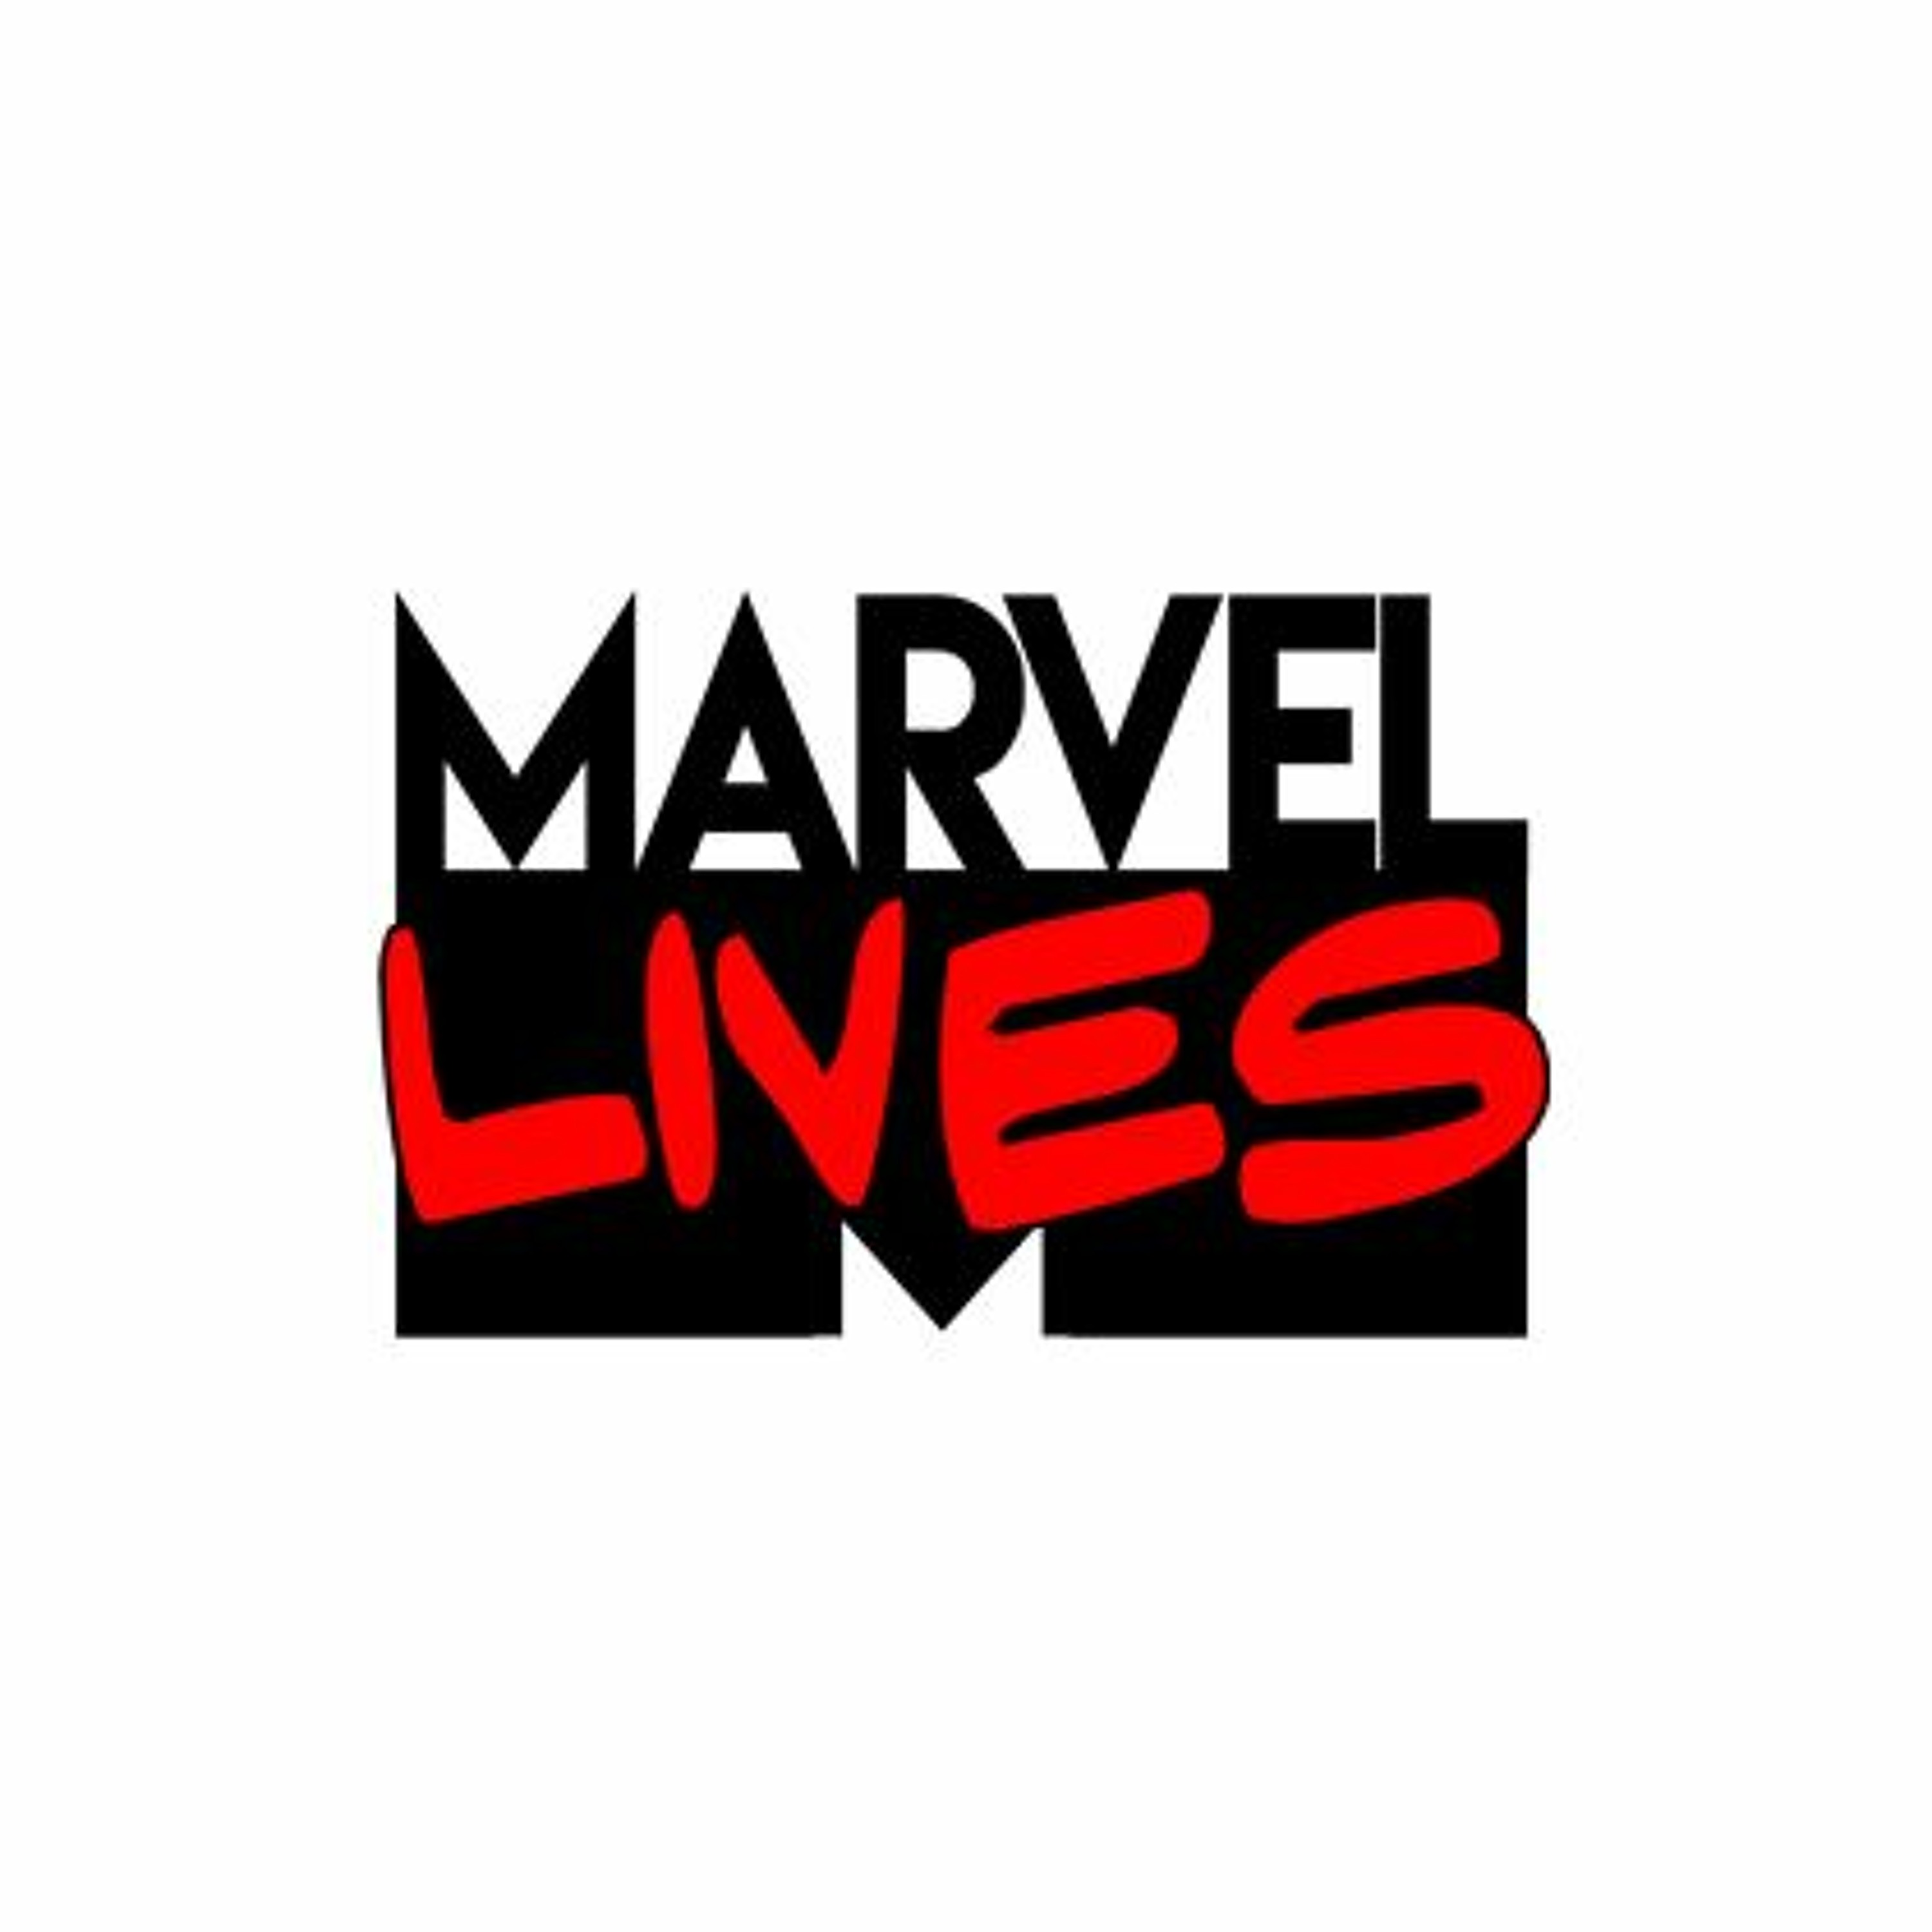 Marvel Lives #6 - Marvel vs Capcom 3 in 2018 and Choose Your Fighter